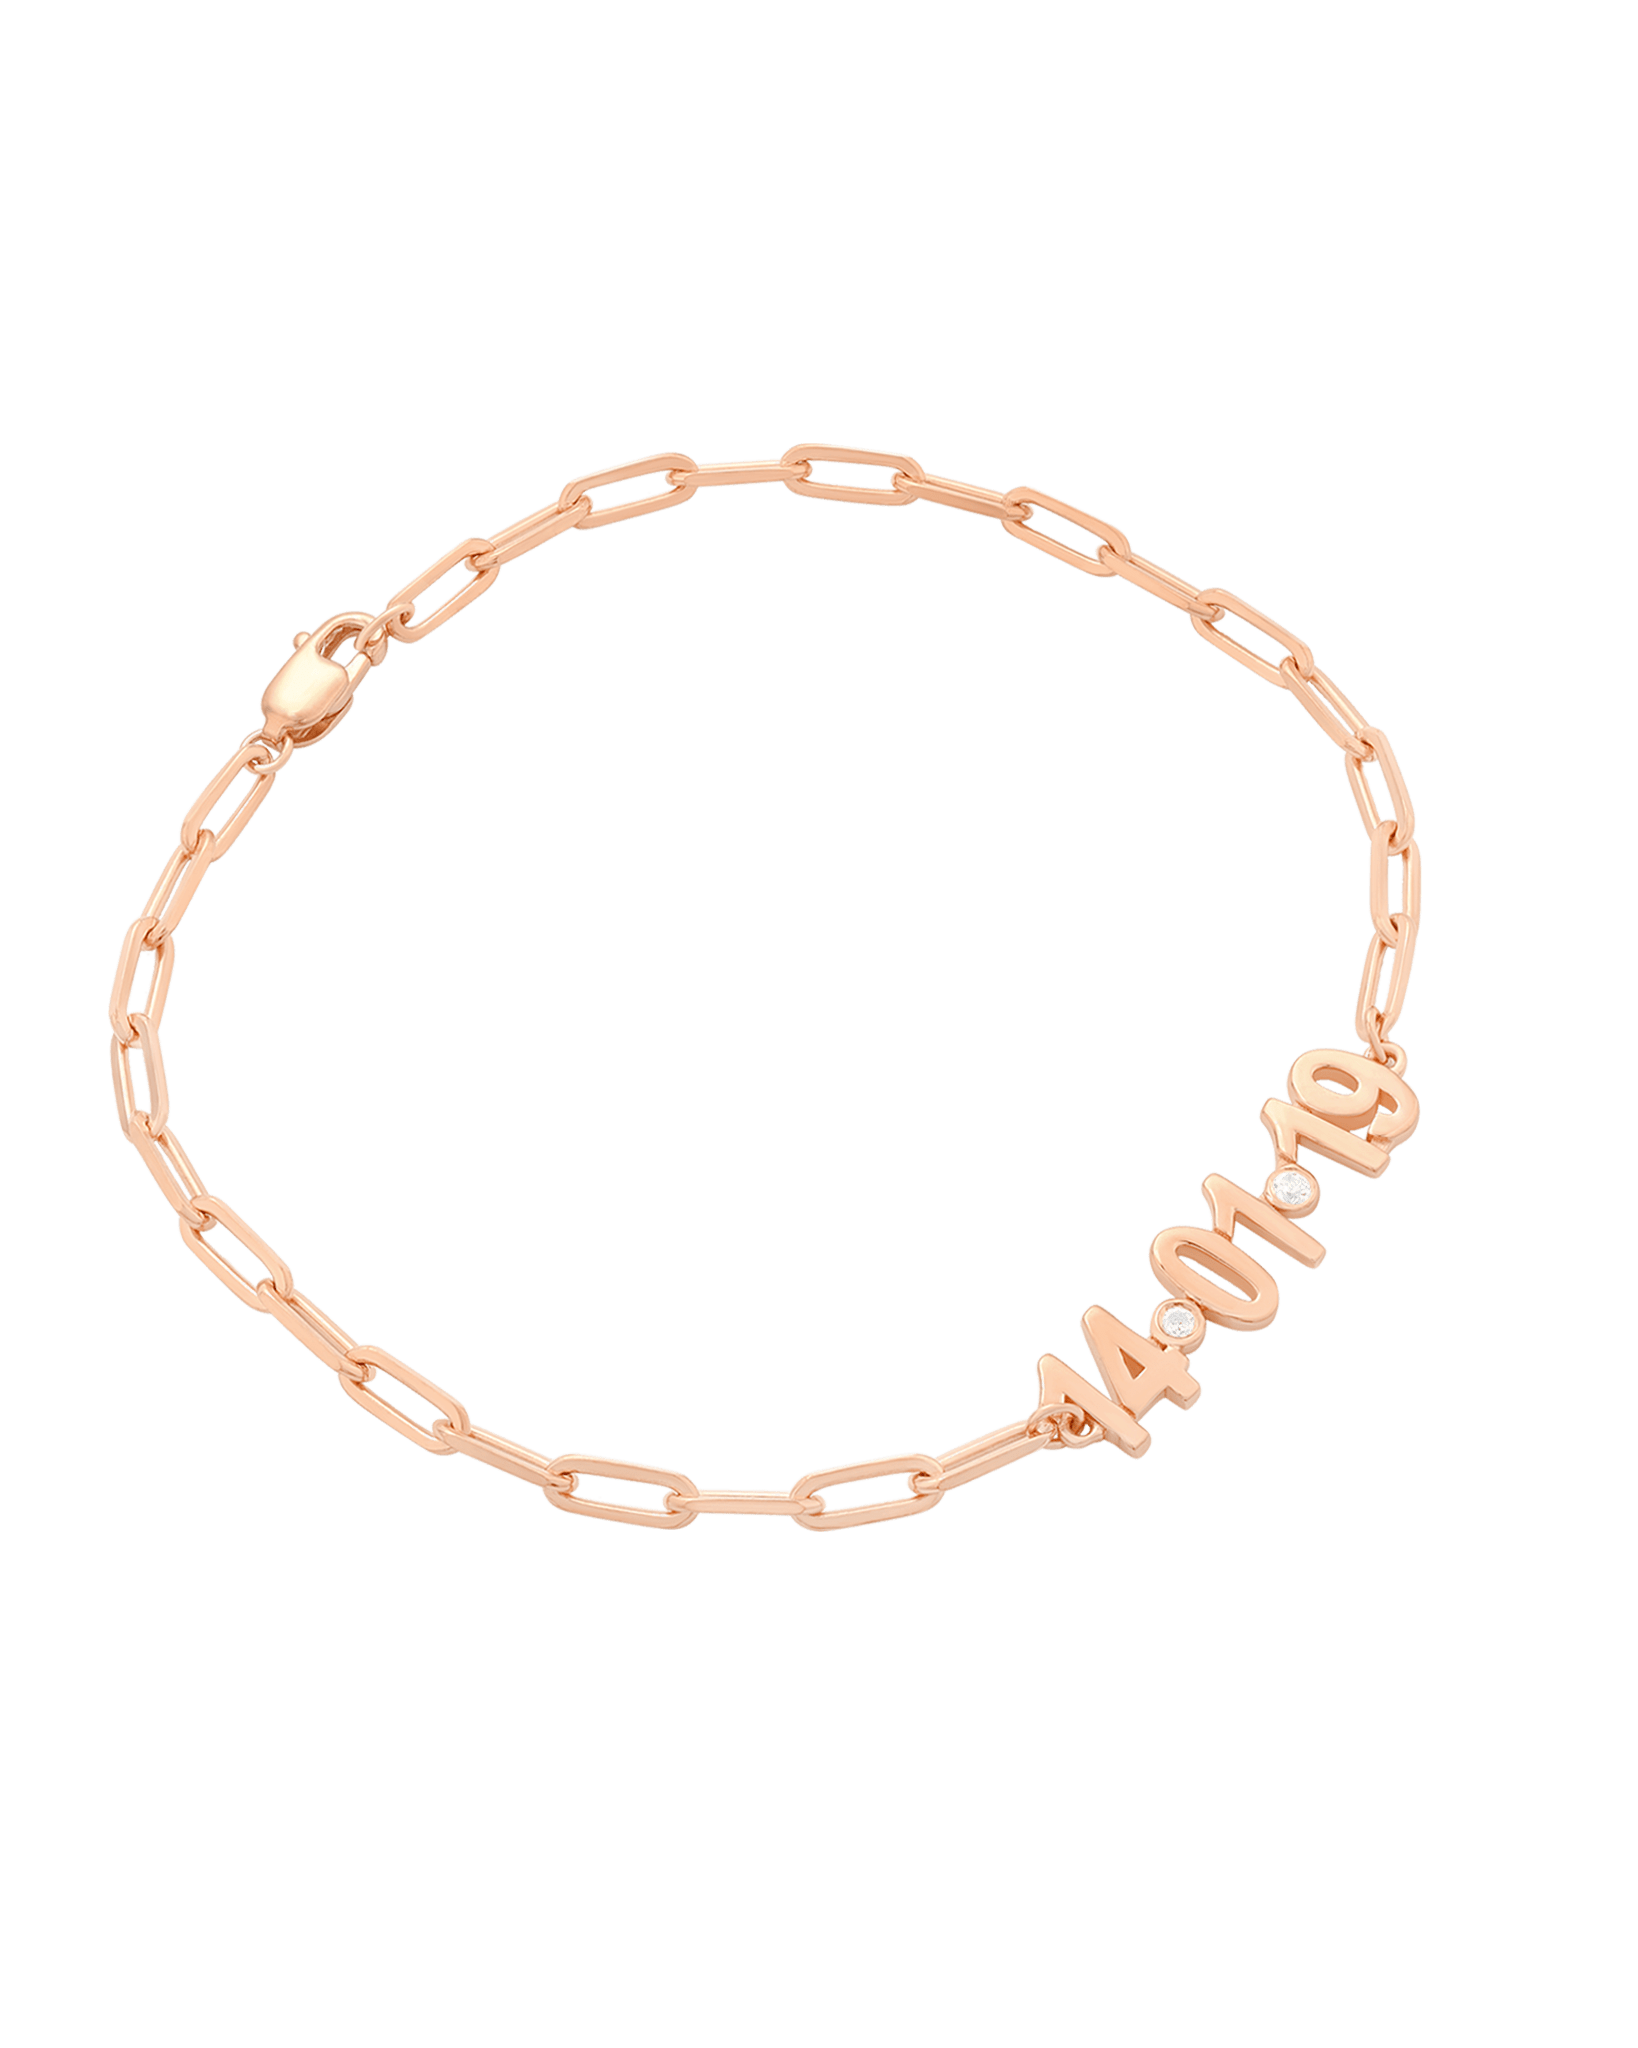 Birthdate Diamond Bracelet - 14K Rose Gold Bracelets magal-dev 6" 